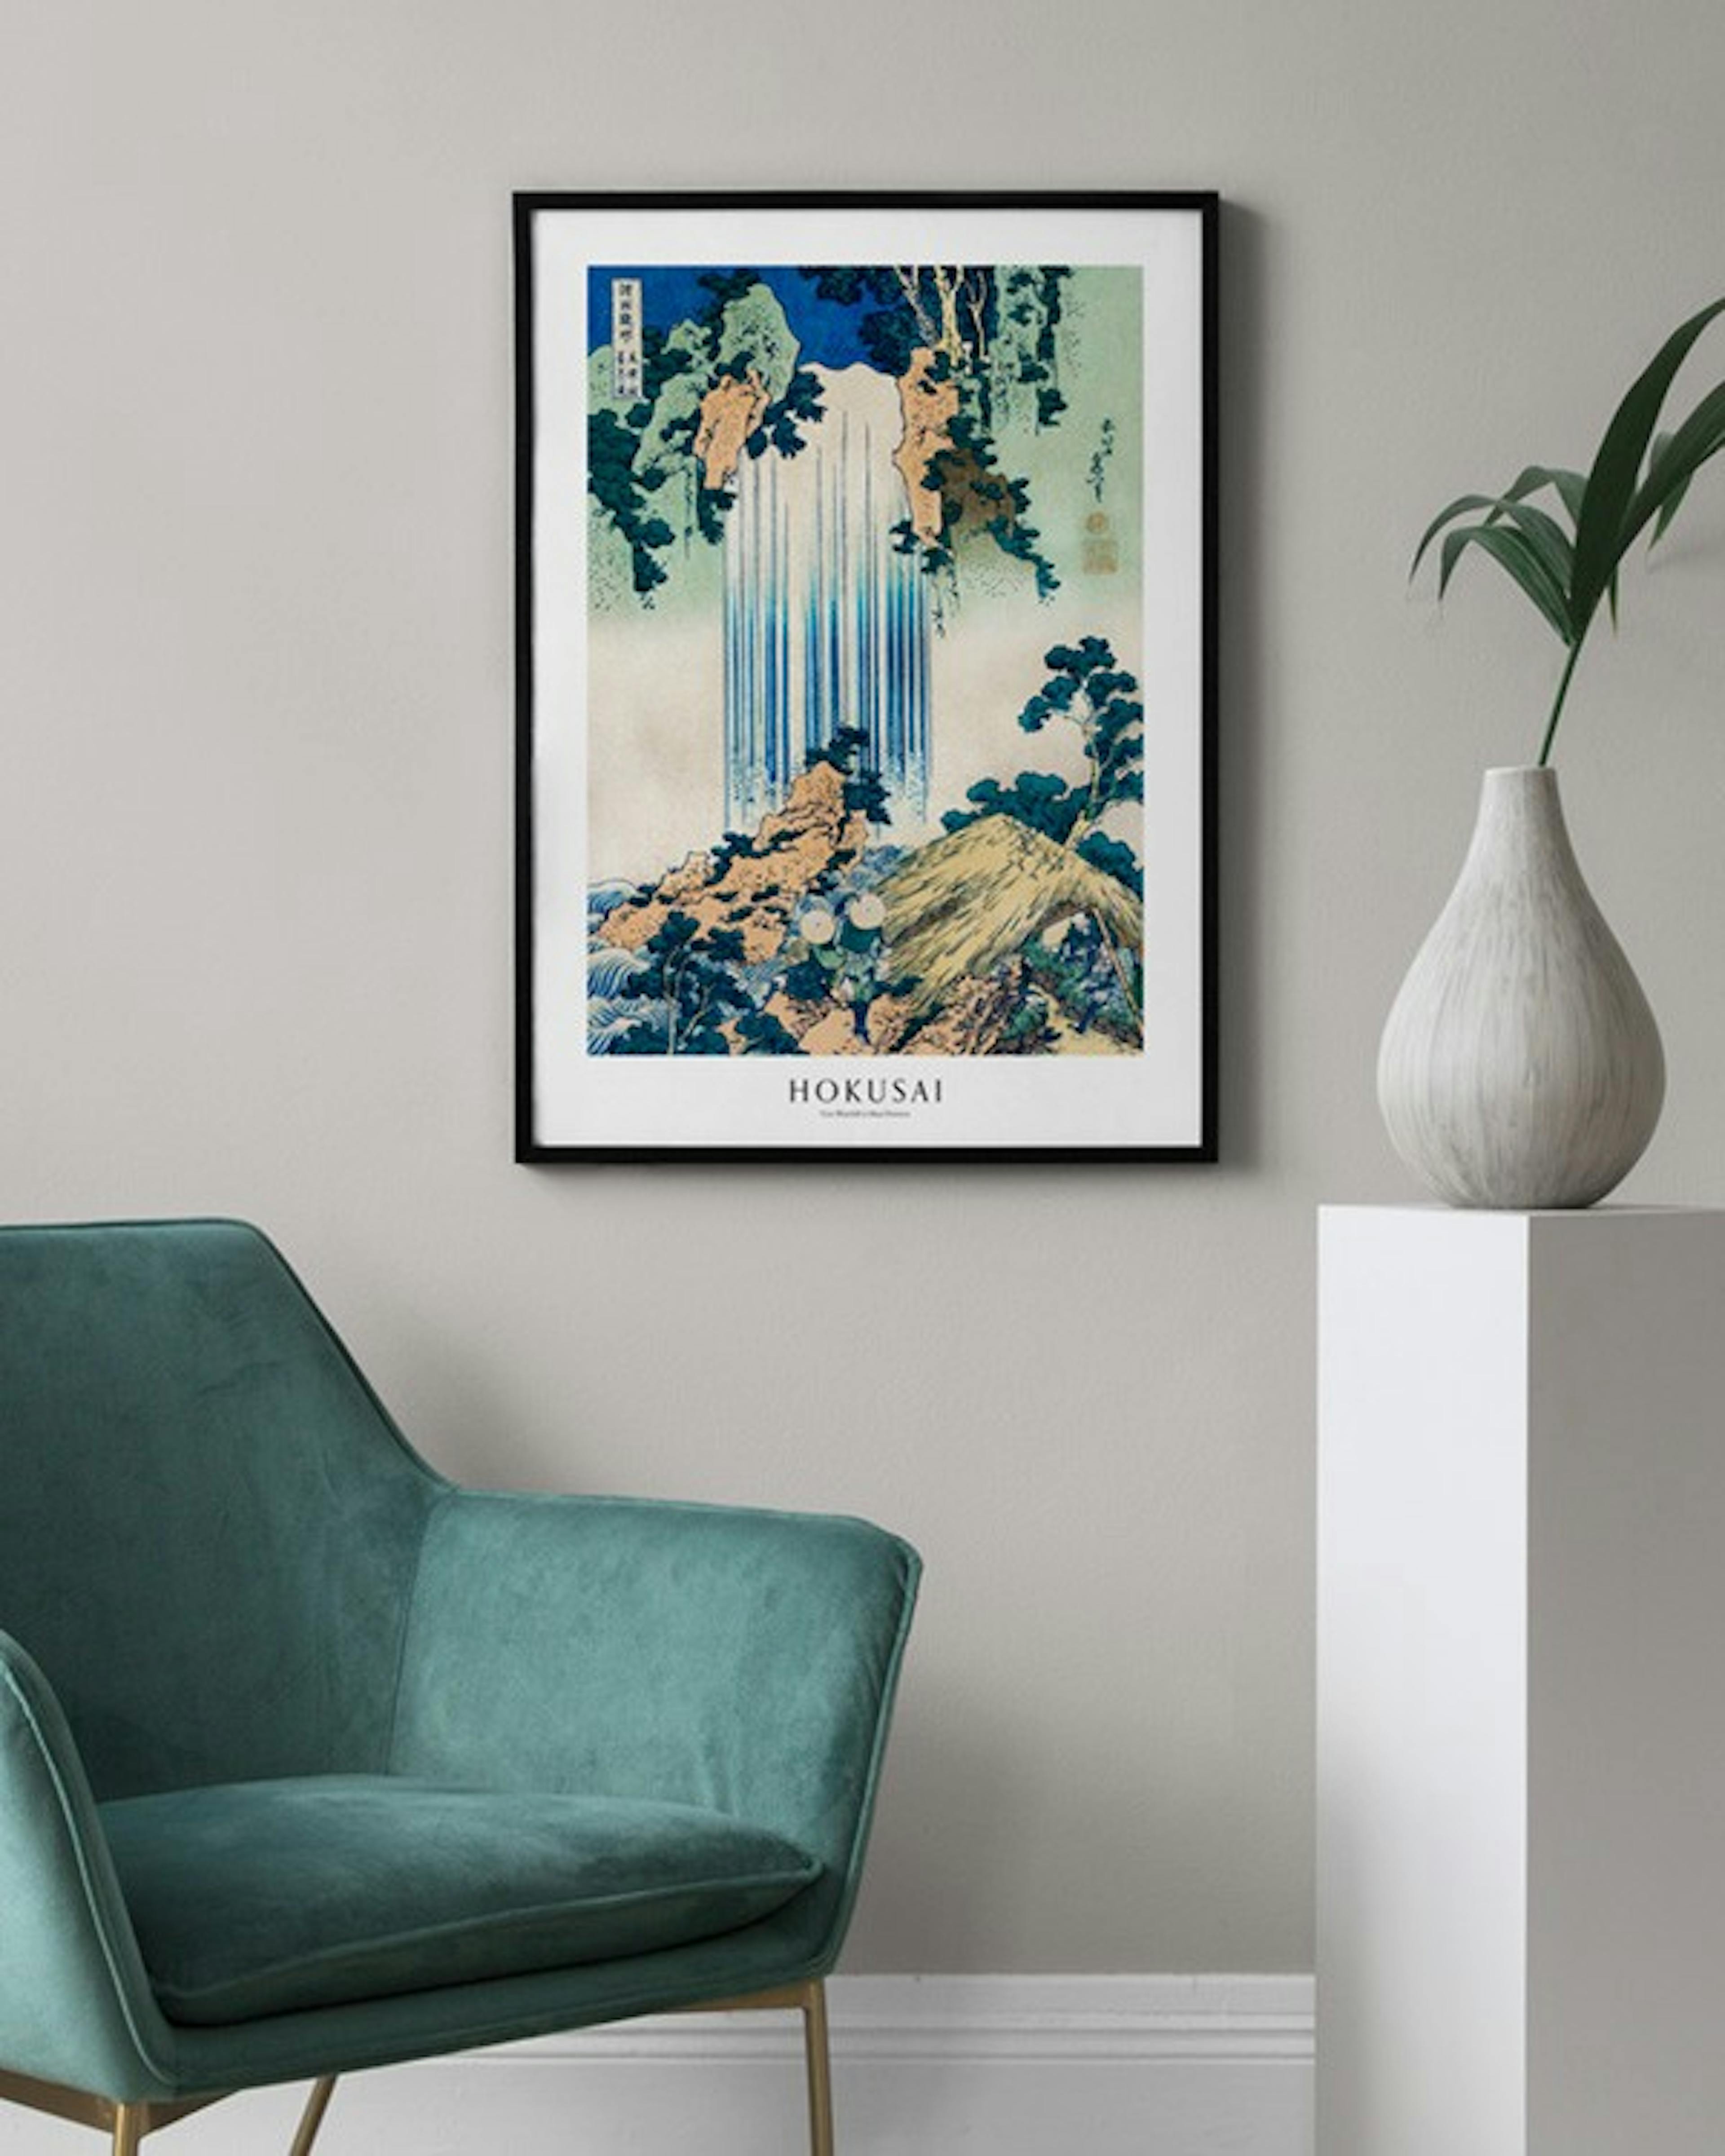 Hokusai - Yoro Waterfall in Mino Province Print